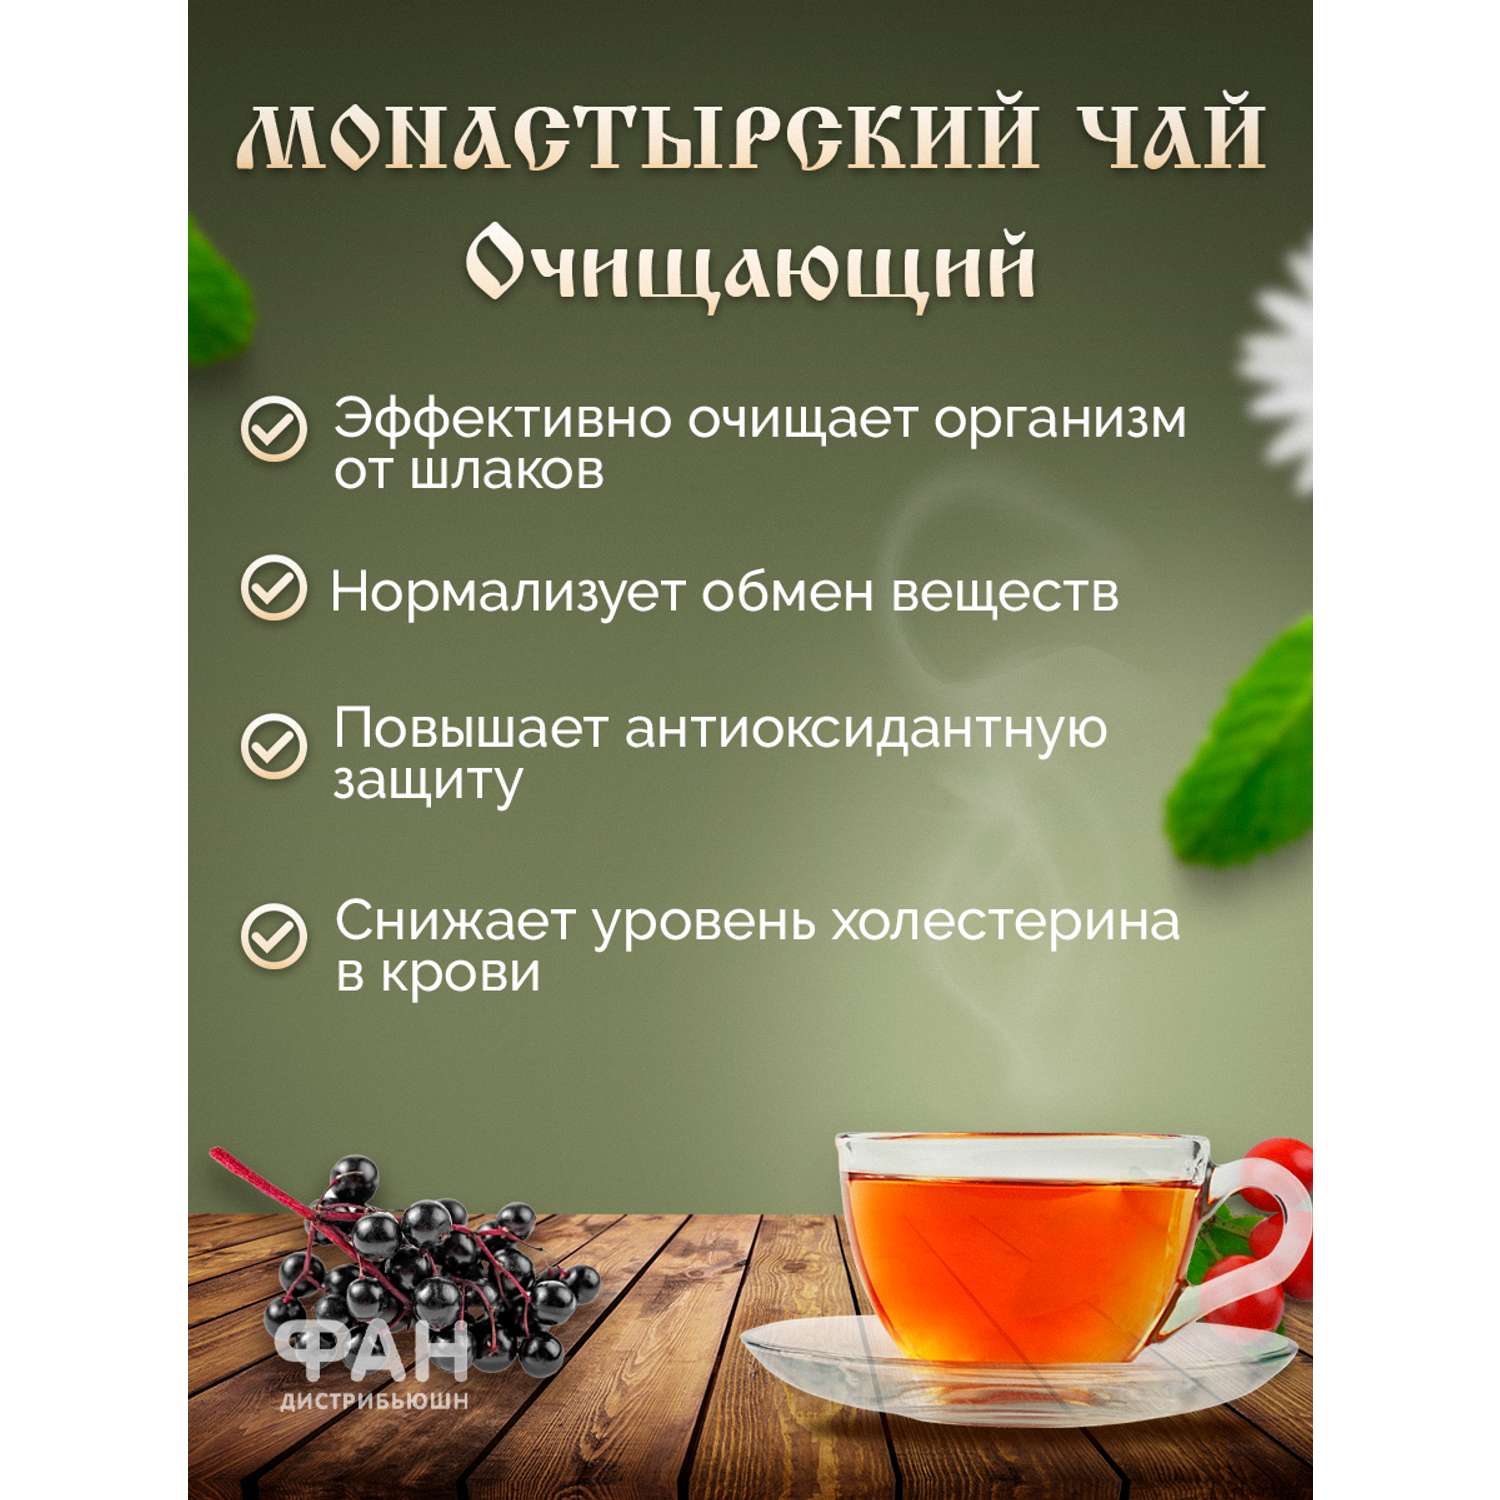 Чай Монастырские травы 8 Очищающий 100 гр. - фото 2